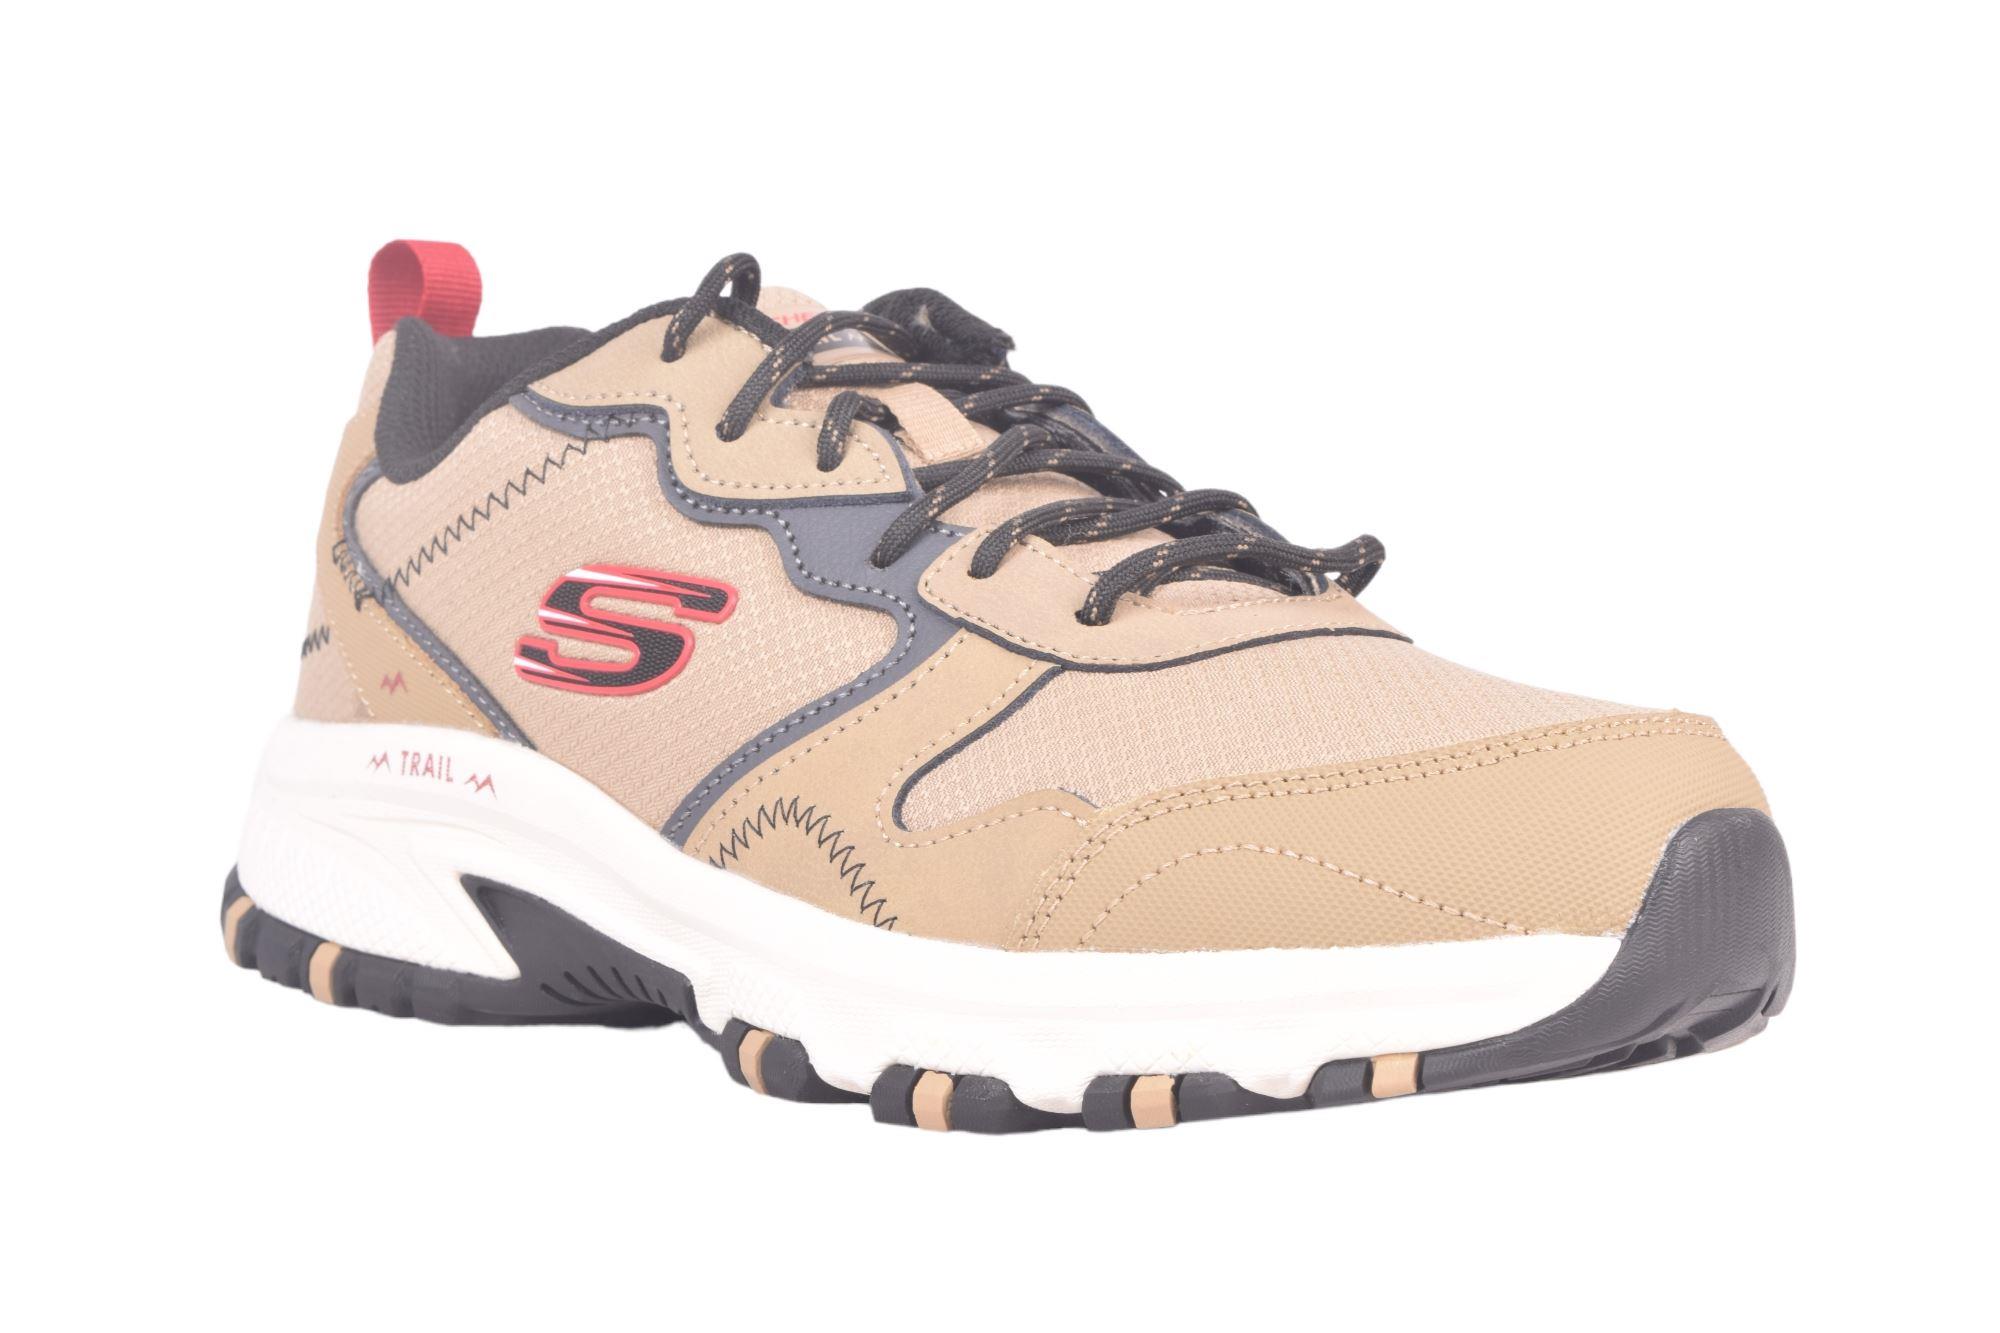 Buy SKECHERS Go Run Trail Altitude-Phantom Synthetic Mesh Lace Up Men's  Sport Shoes